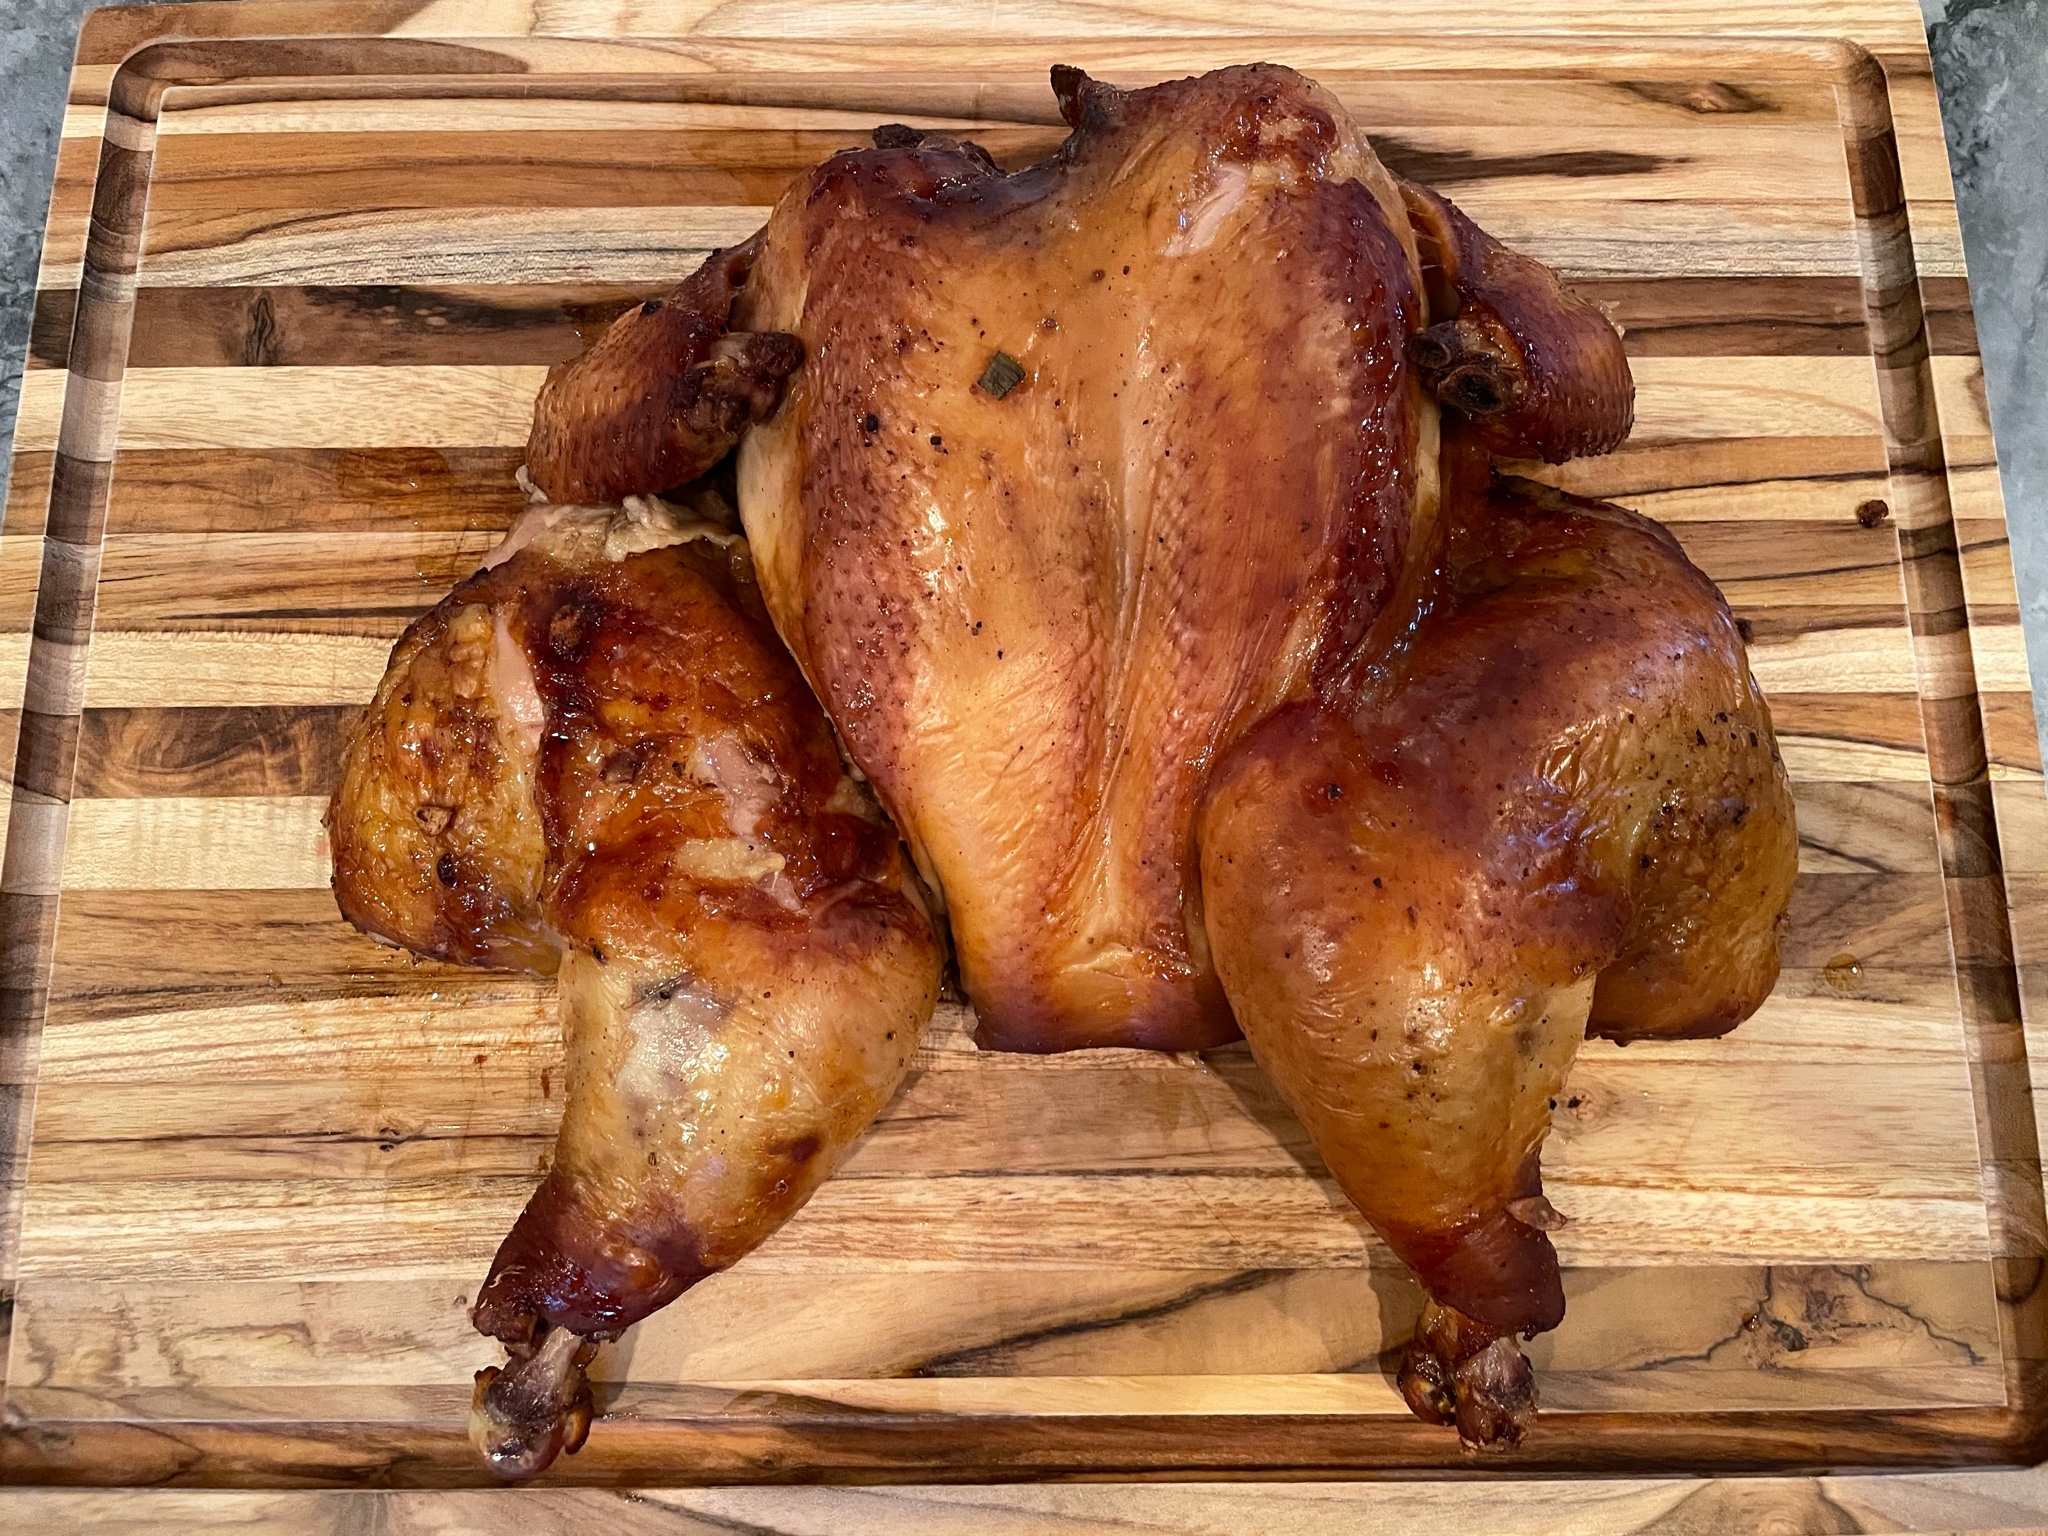 Chinese roast chicken